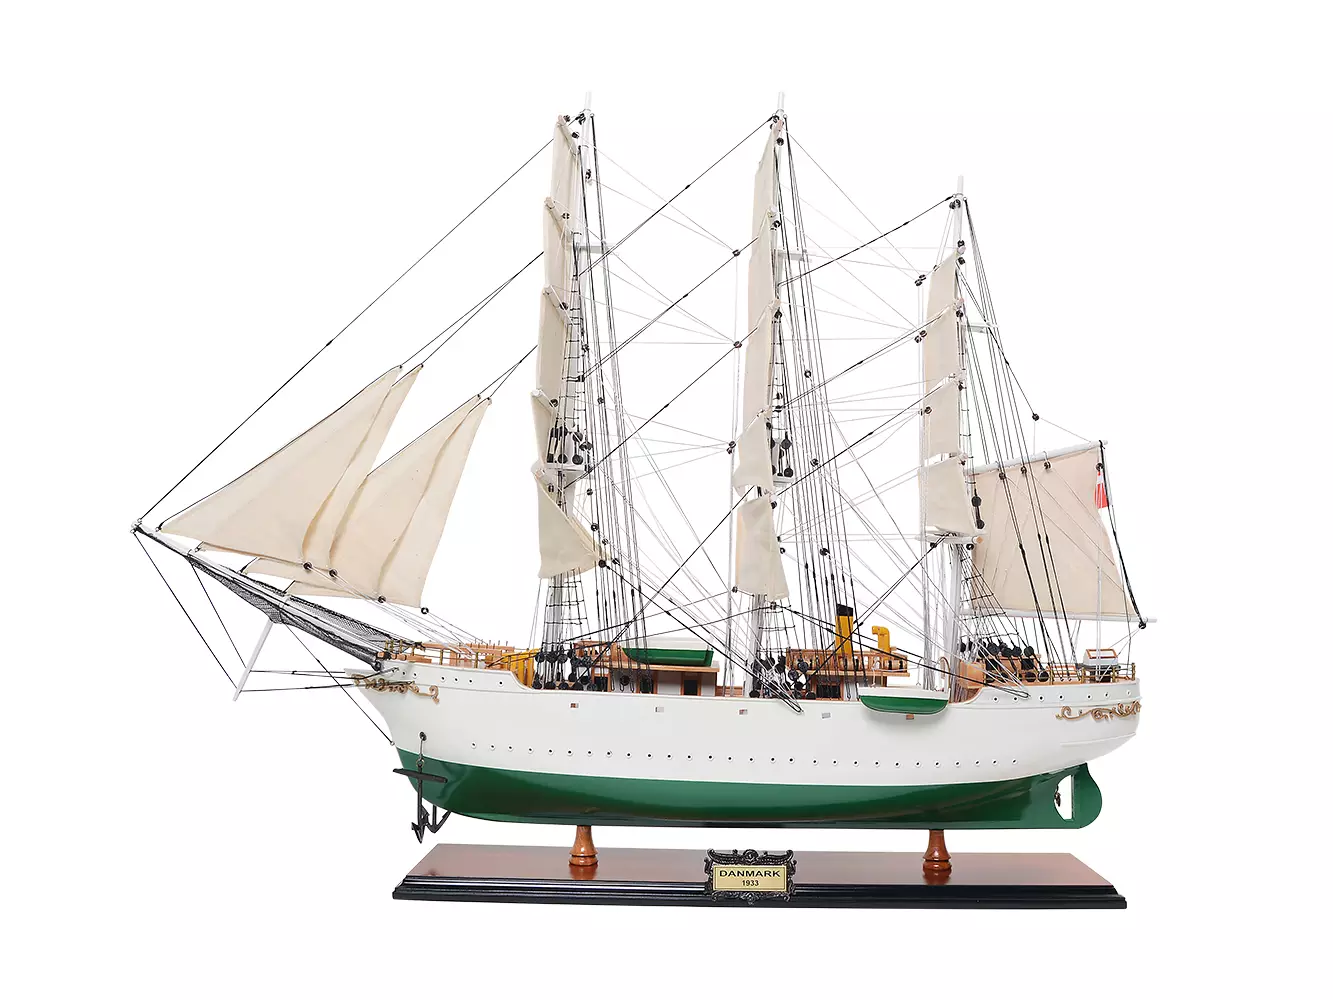 Danmark Model Ship - OMH (T020)